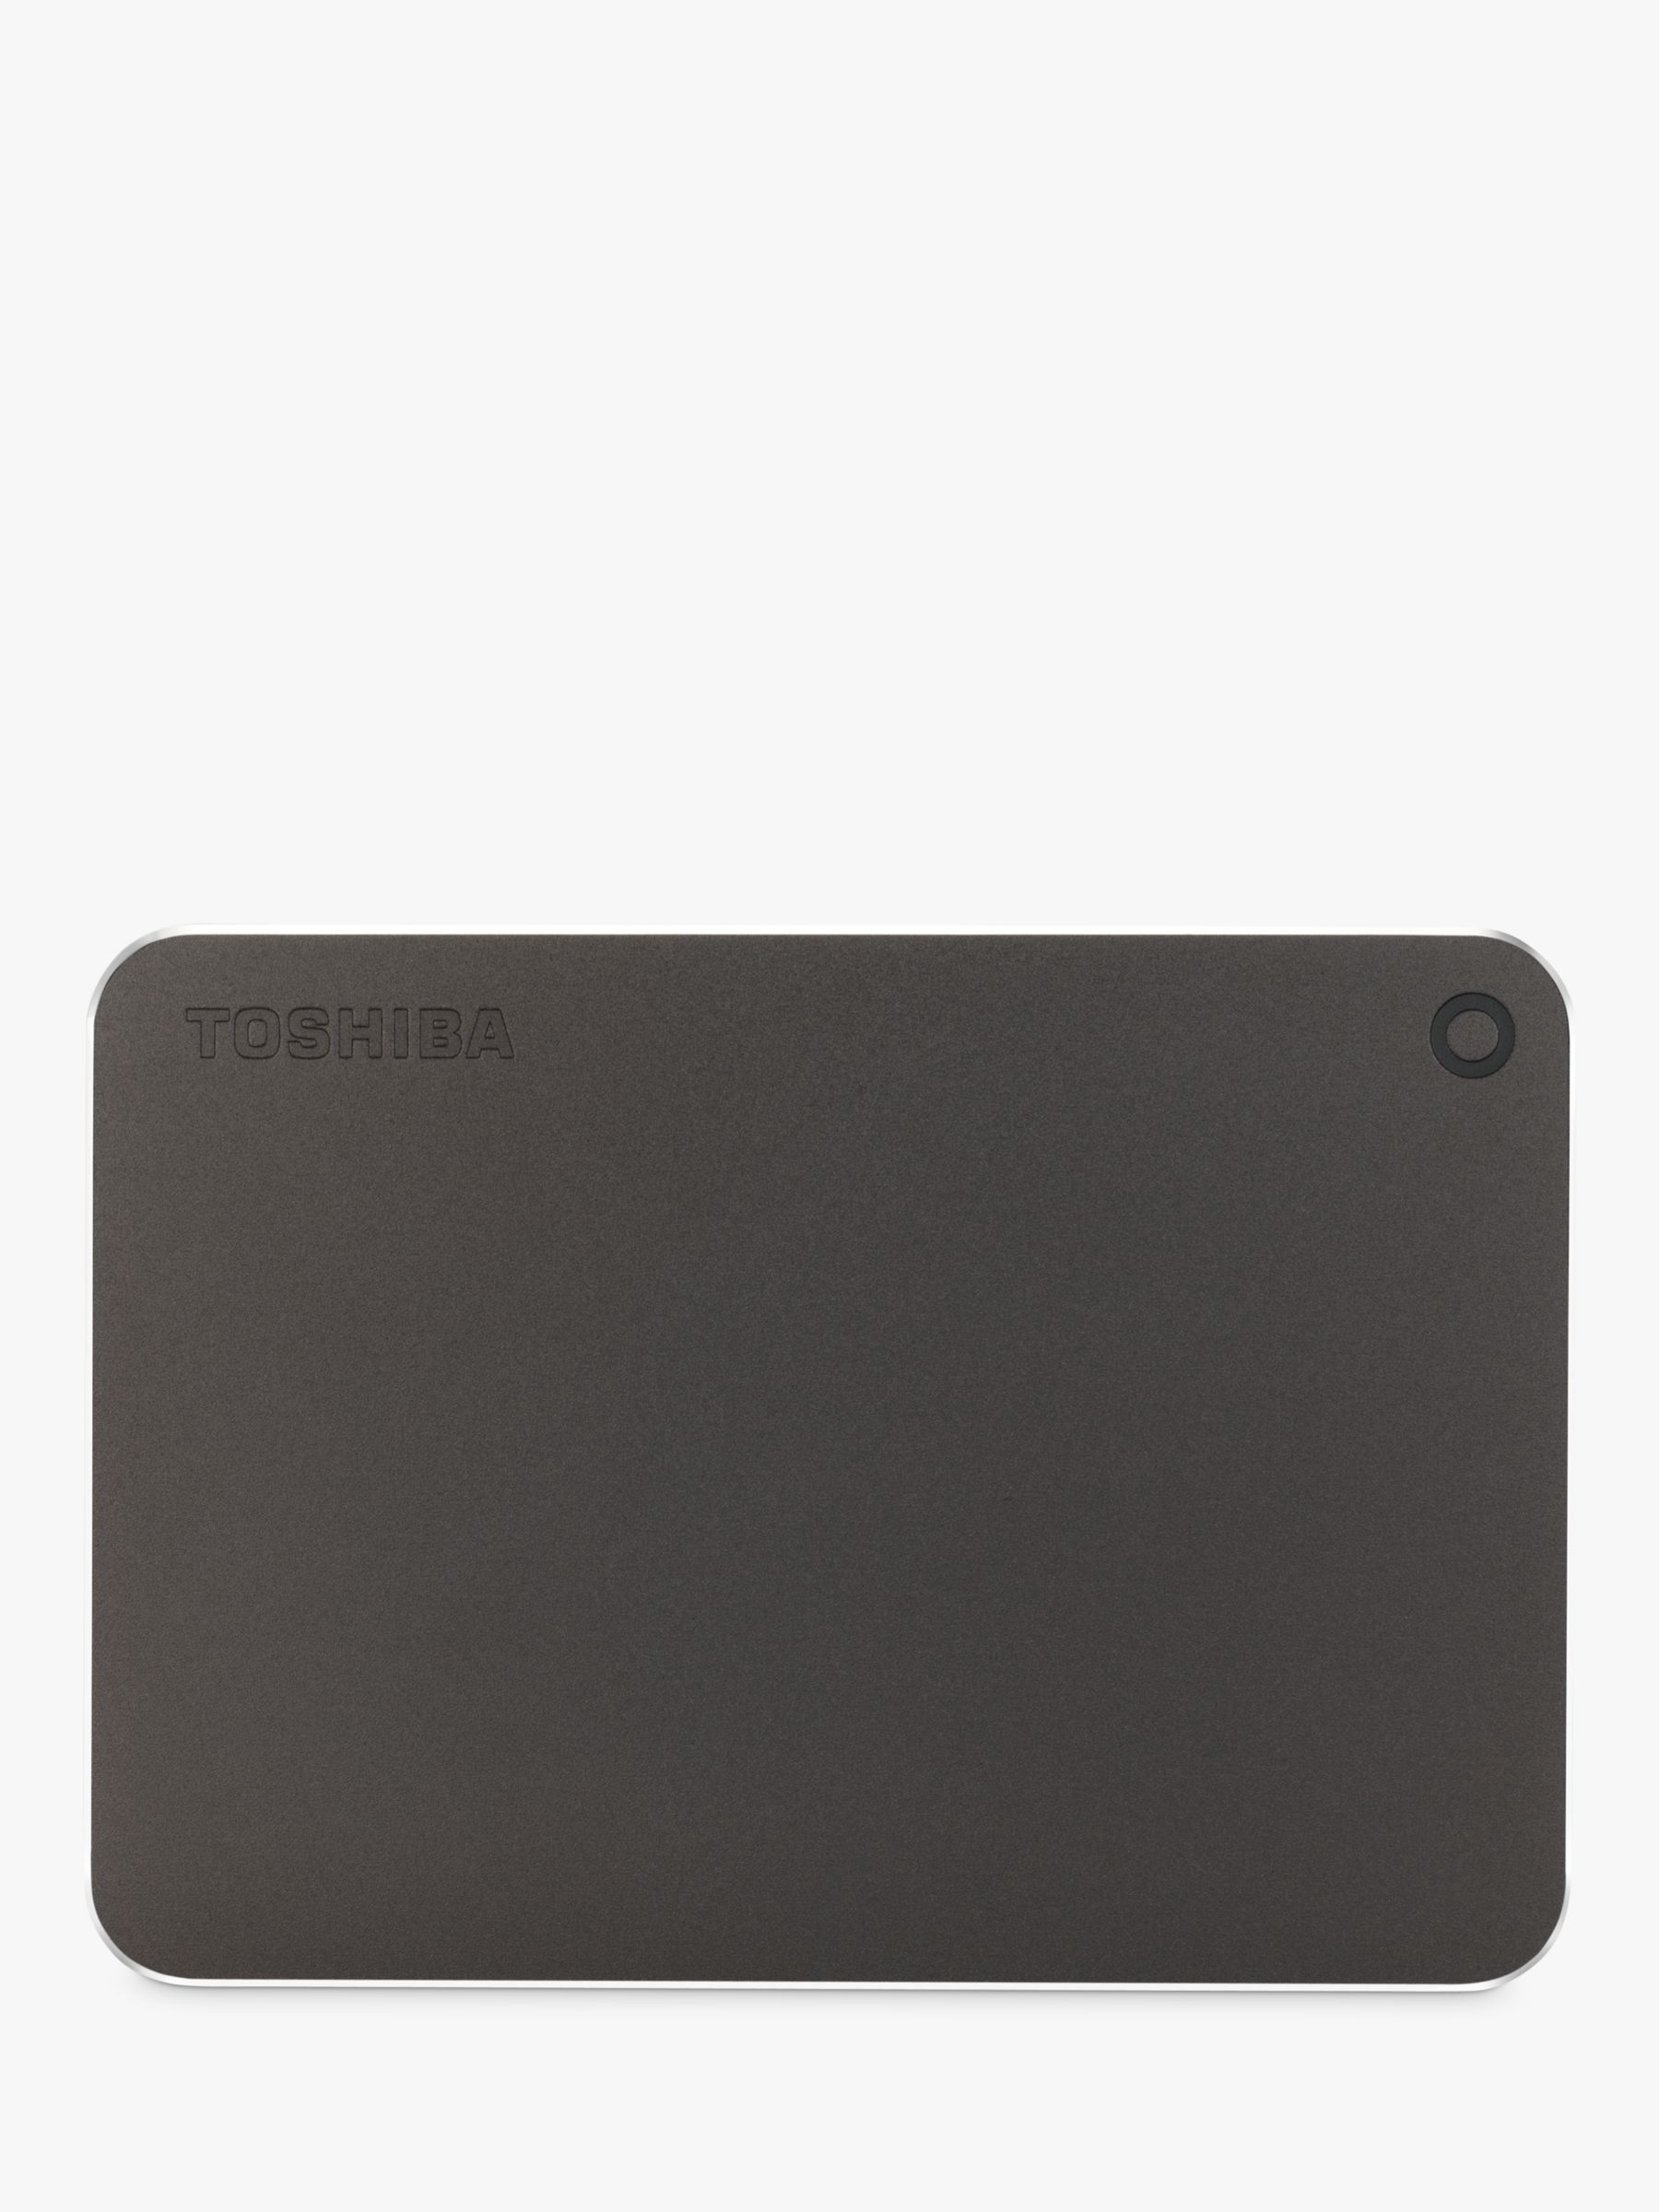 Toshiba Canvio Premium, Portable Hard Drive, USB 3.0, 2TB, Grey